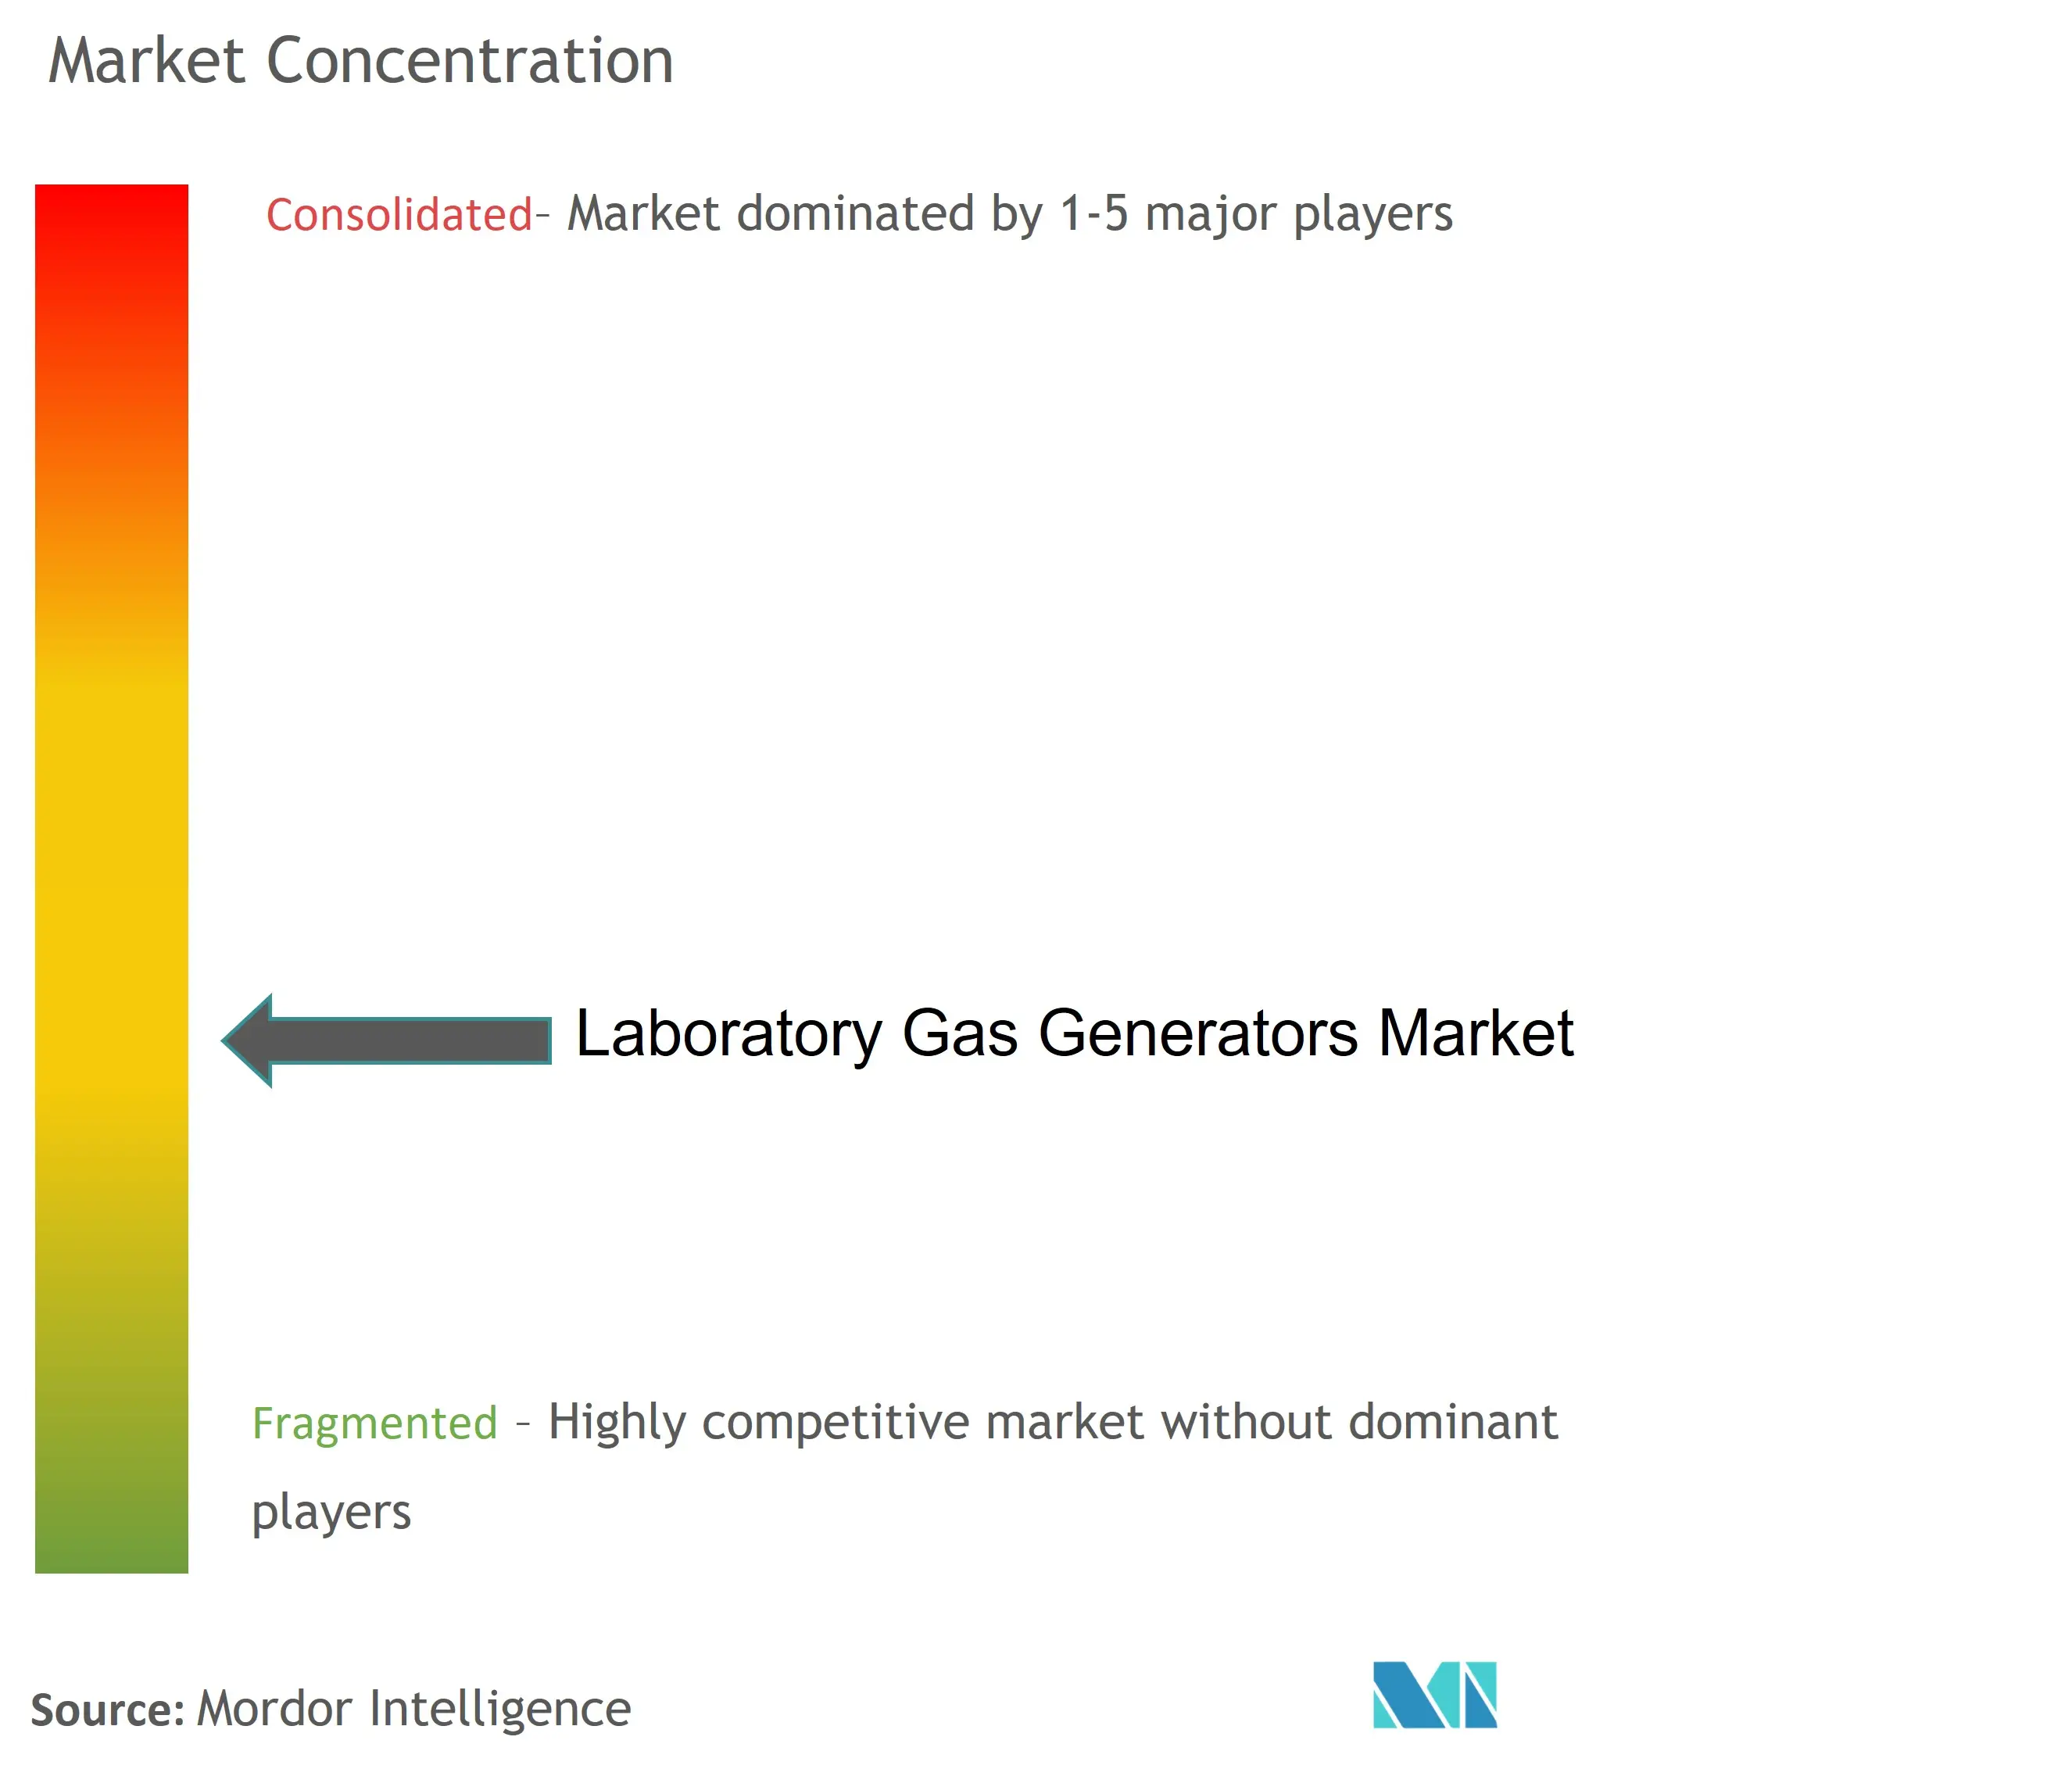 Laboratory Gas Generators Market Concentration